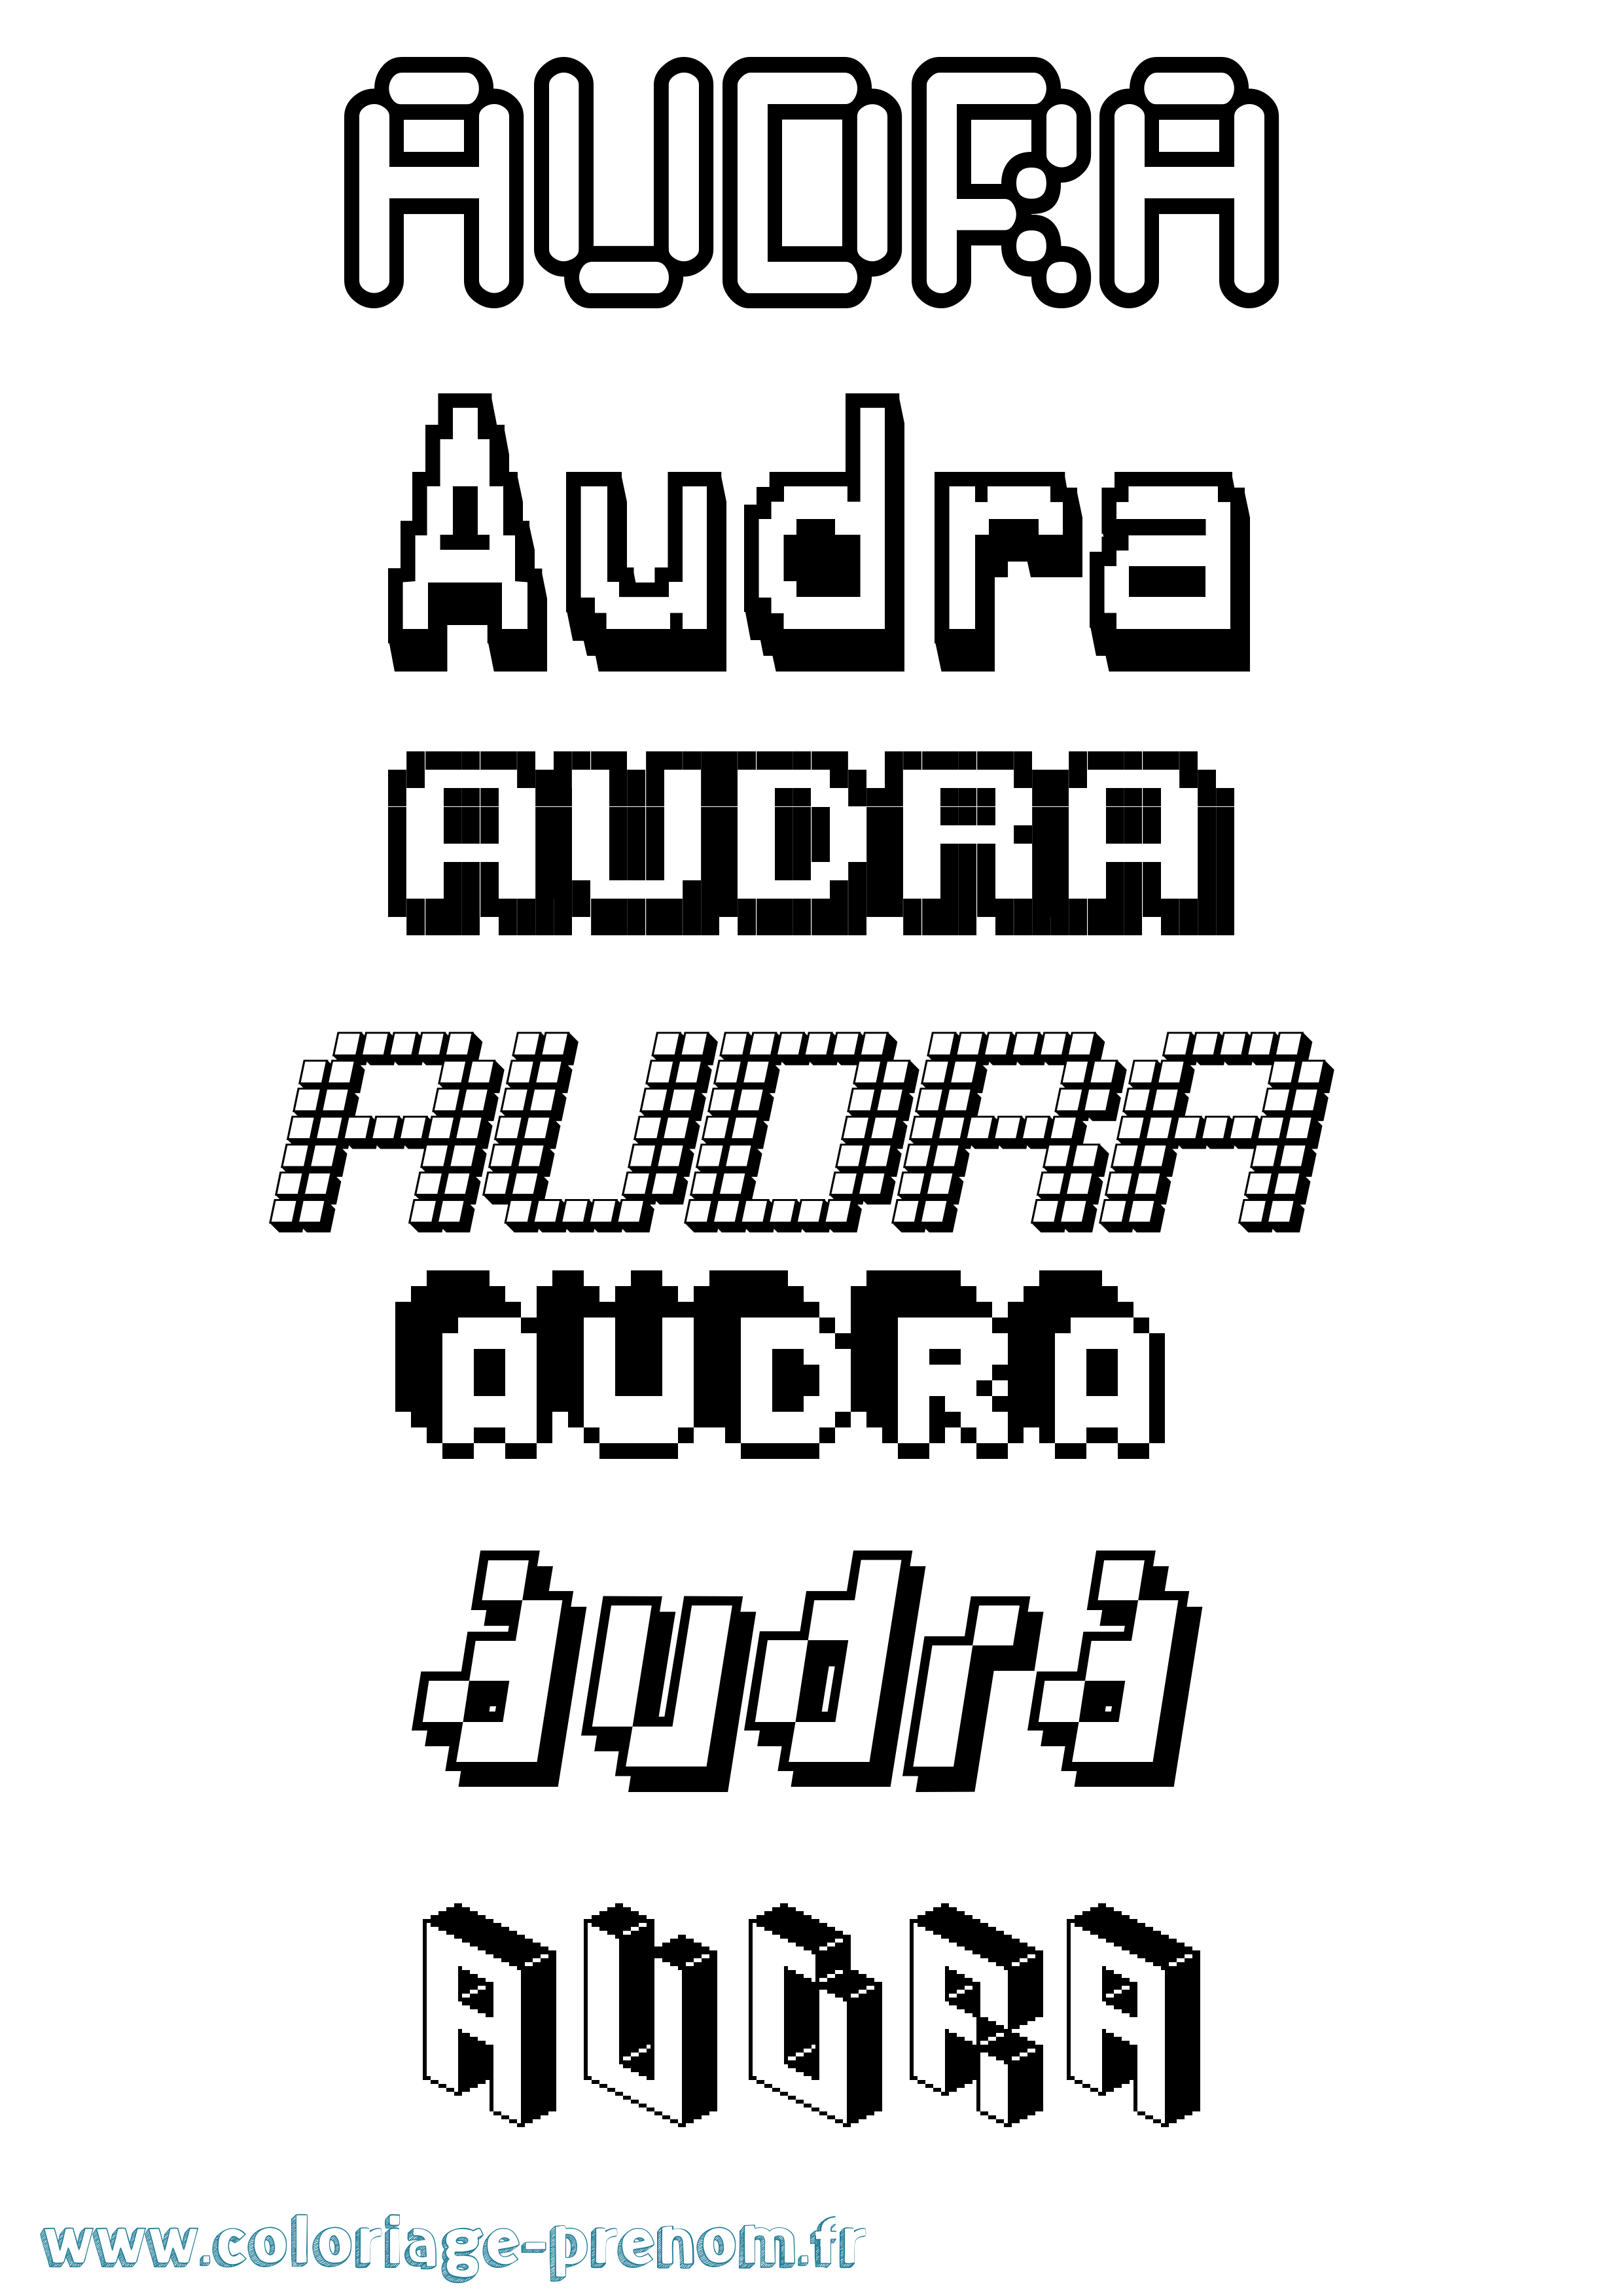 Coloriage prénom Audra Pixel